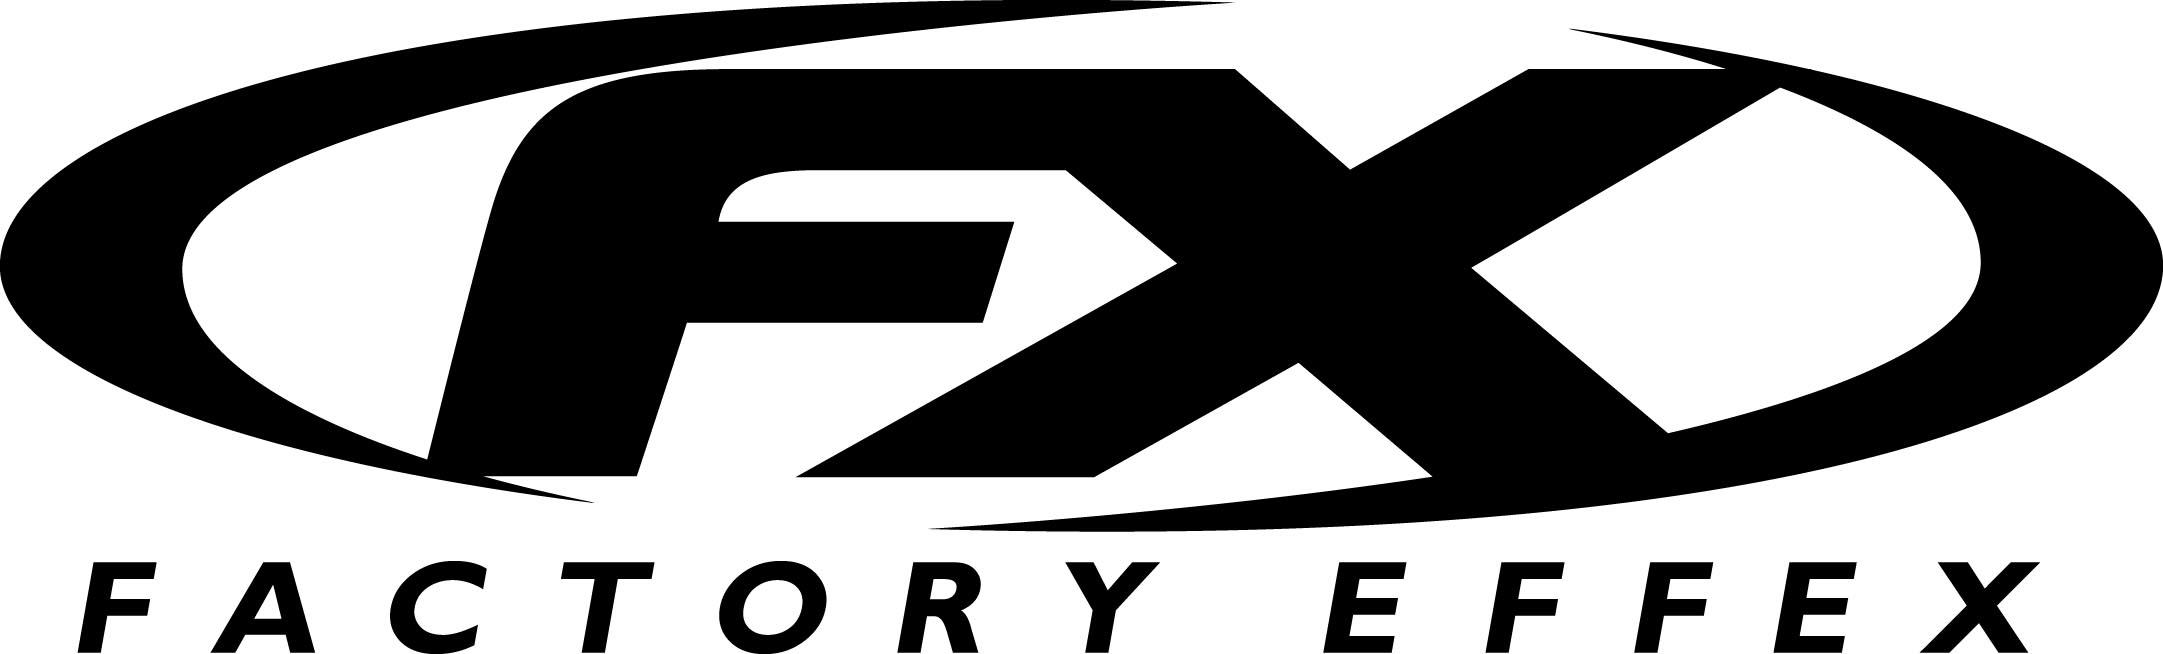 Dforex factory